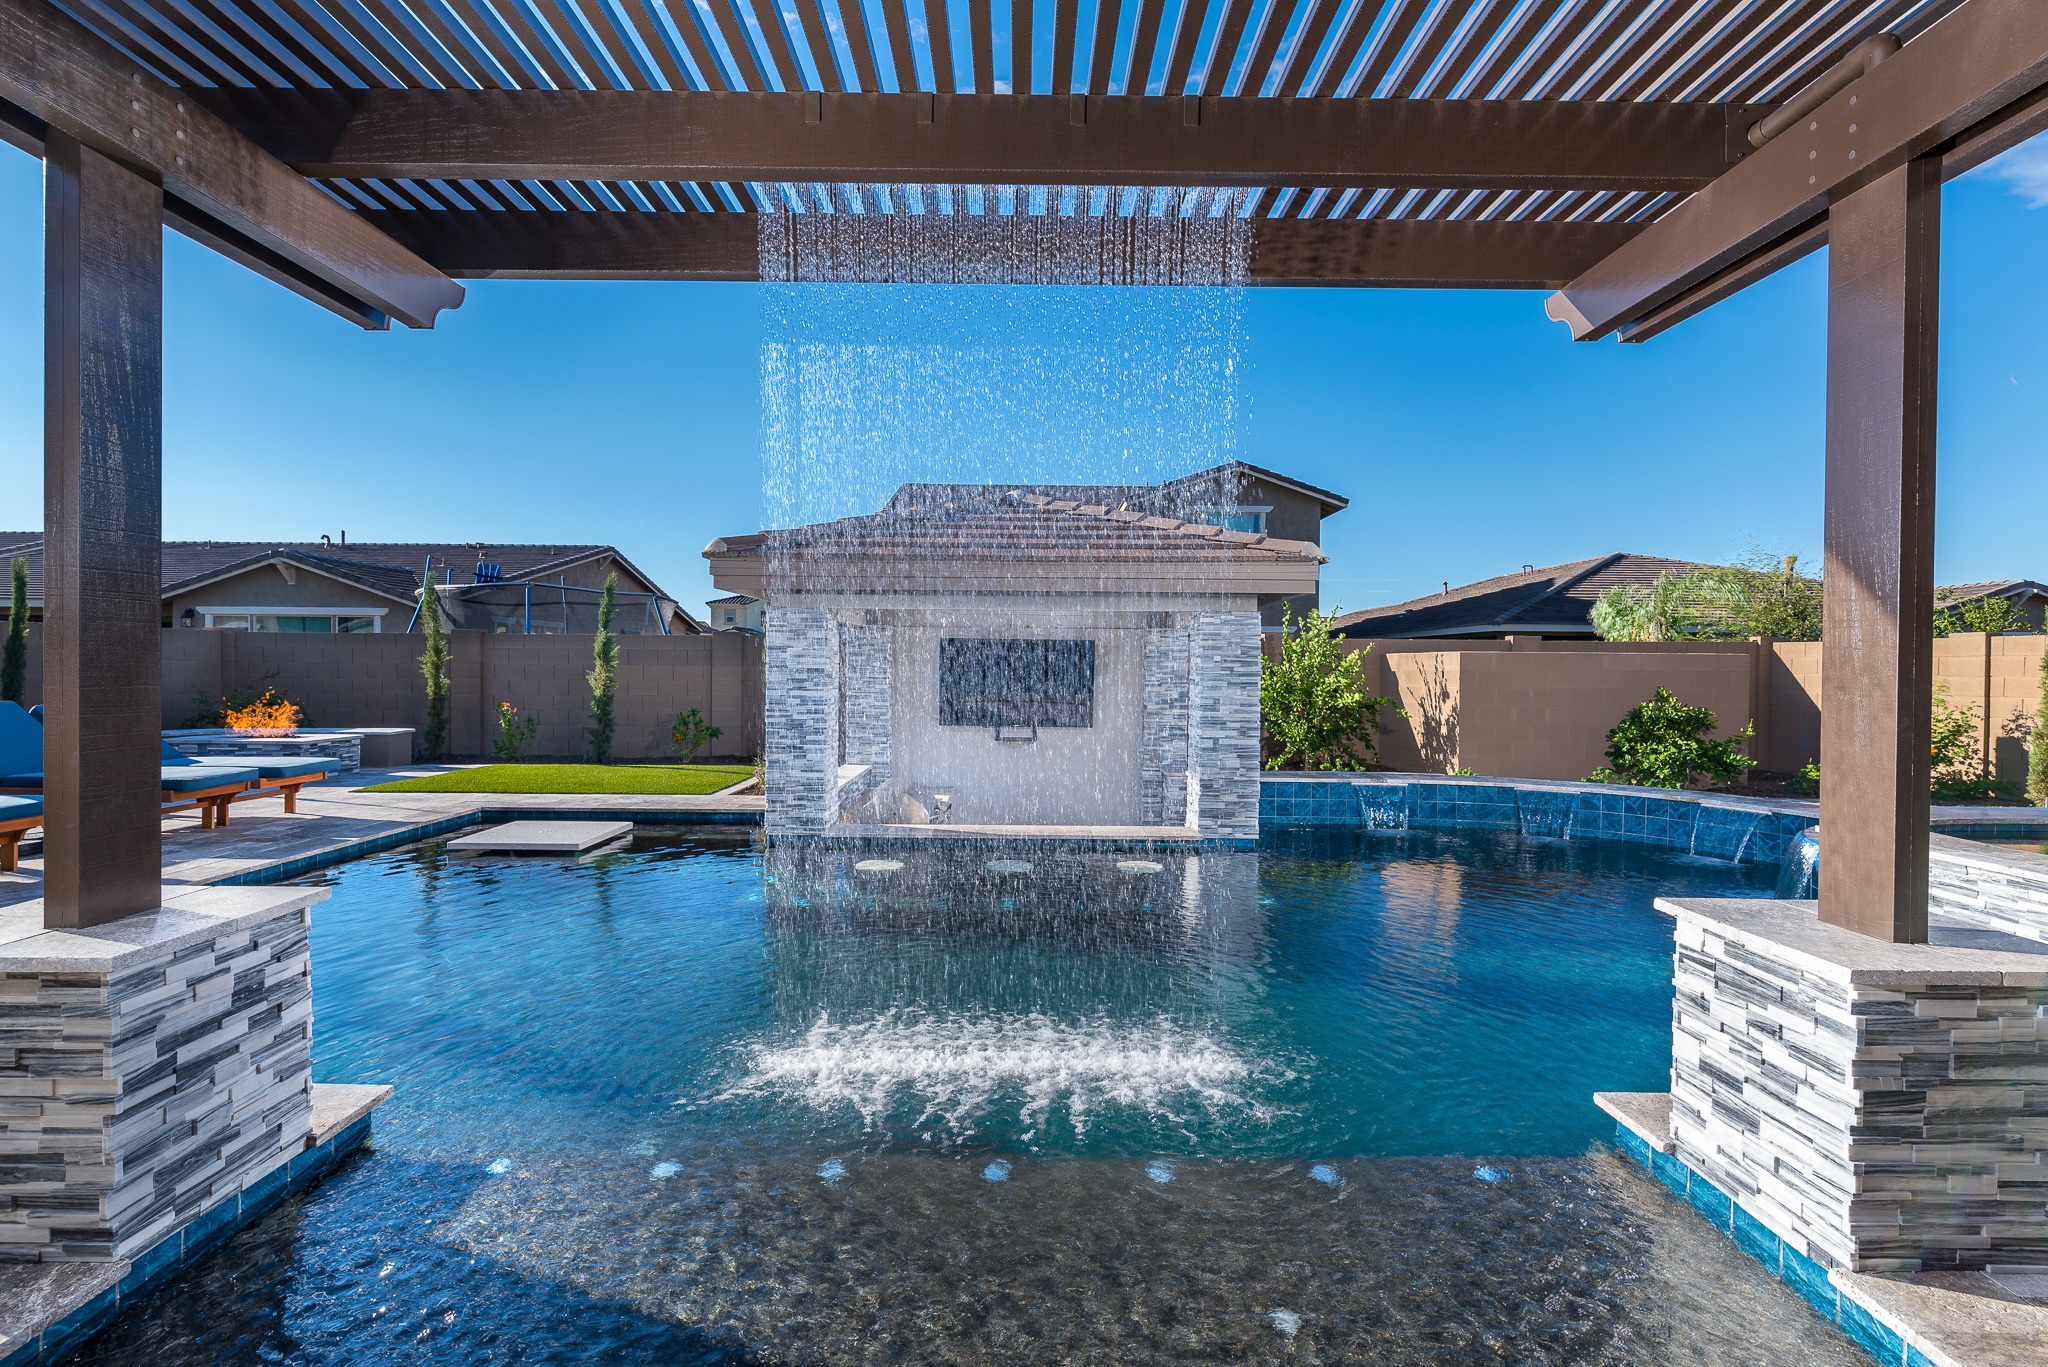 2018's Most Popular Swimming Pool Design: Jenik Family of Chandler Heights, Arizona